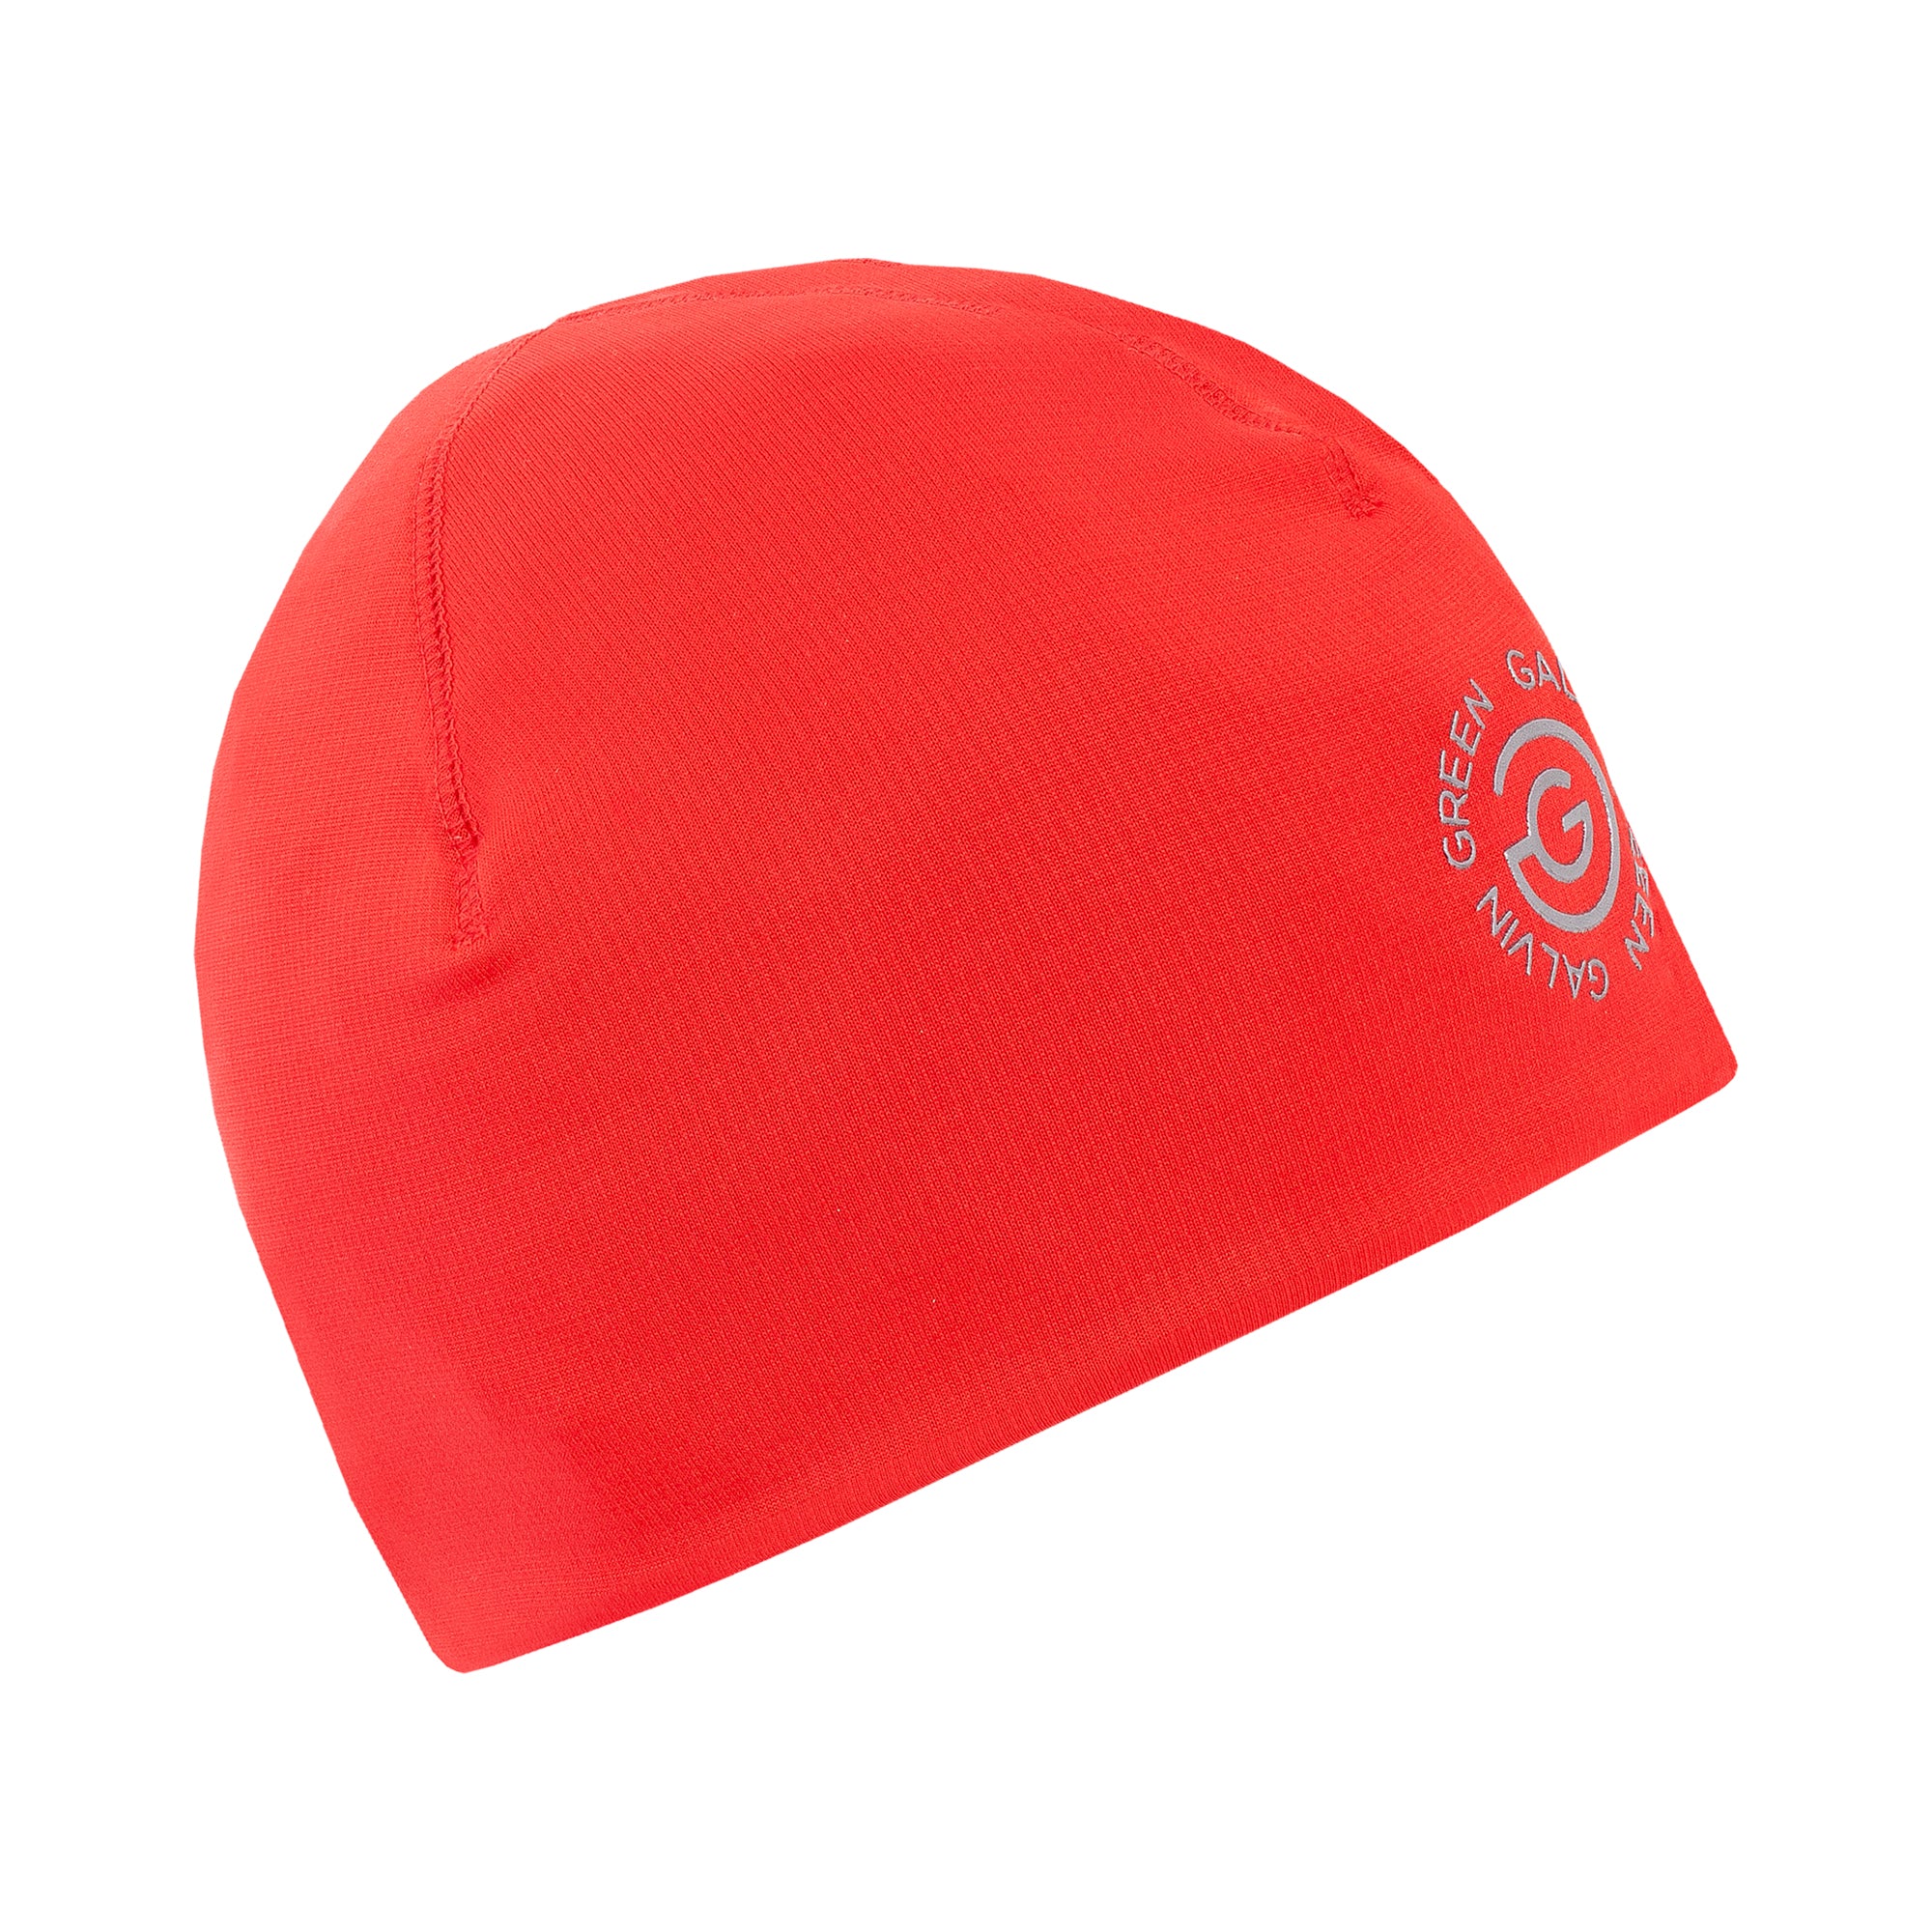 galvin-green-denver-insula-golf-hat-red-9413